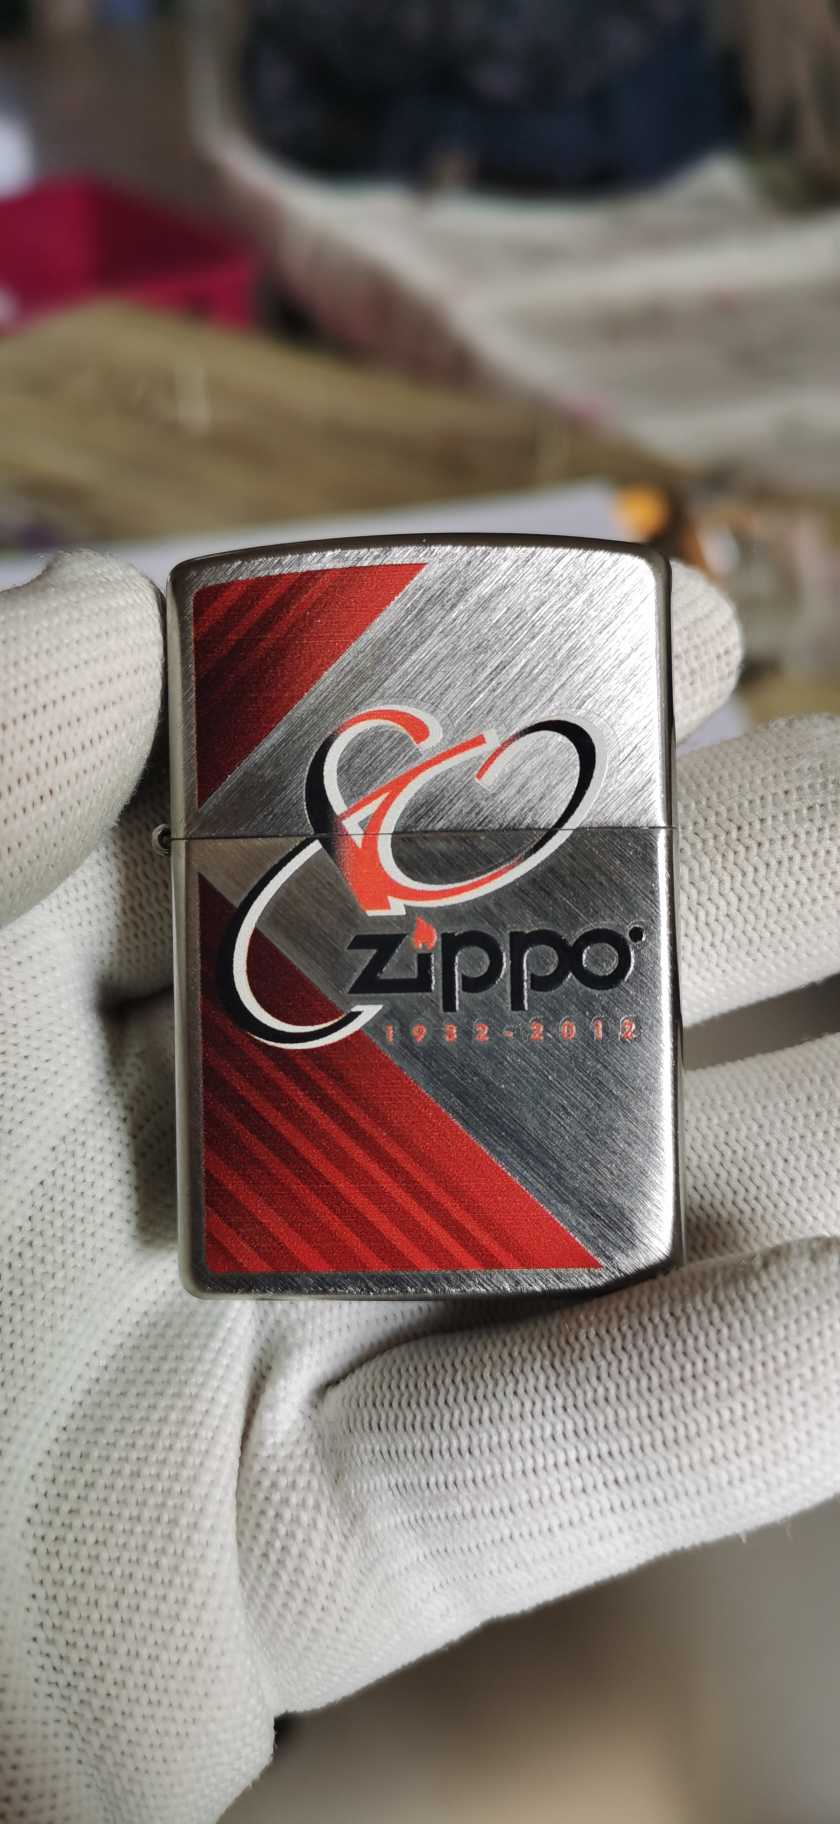 zippo打火机2012年年册图片